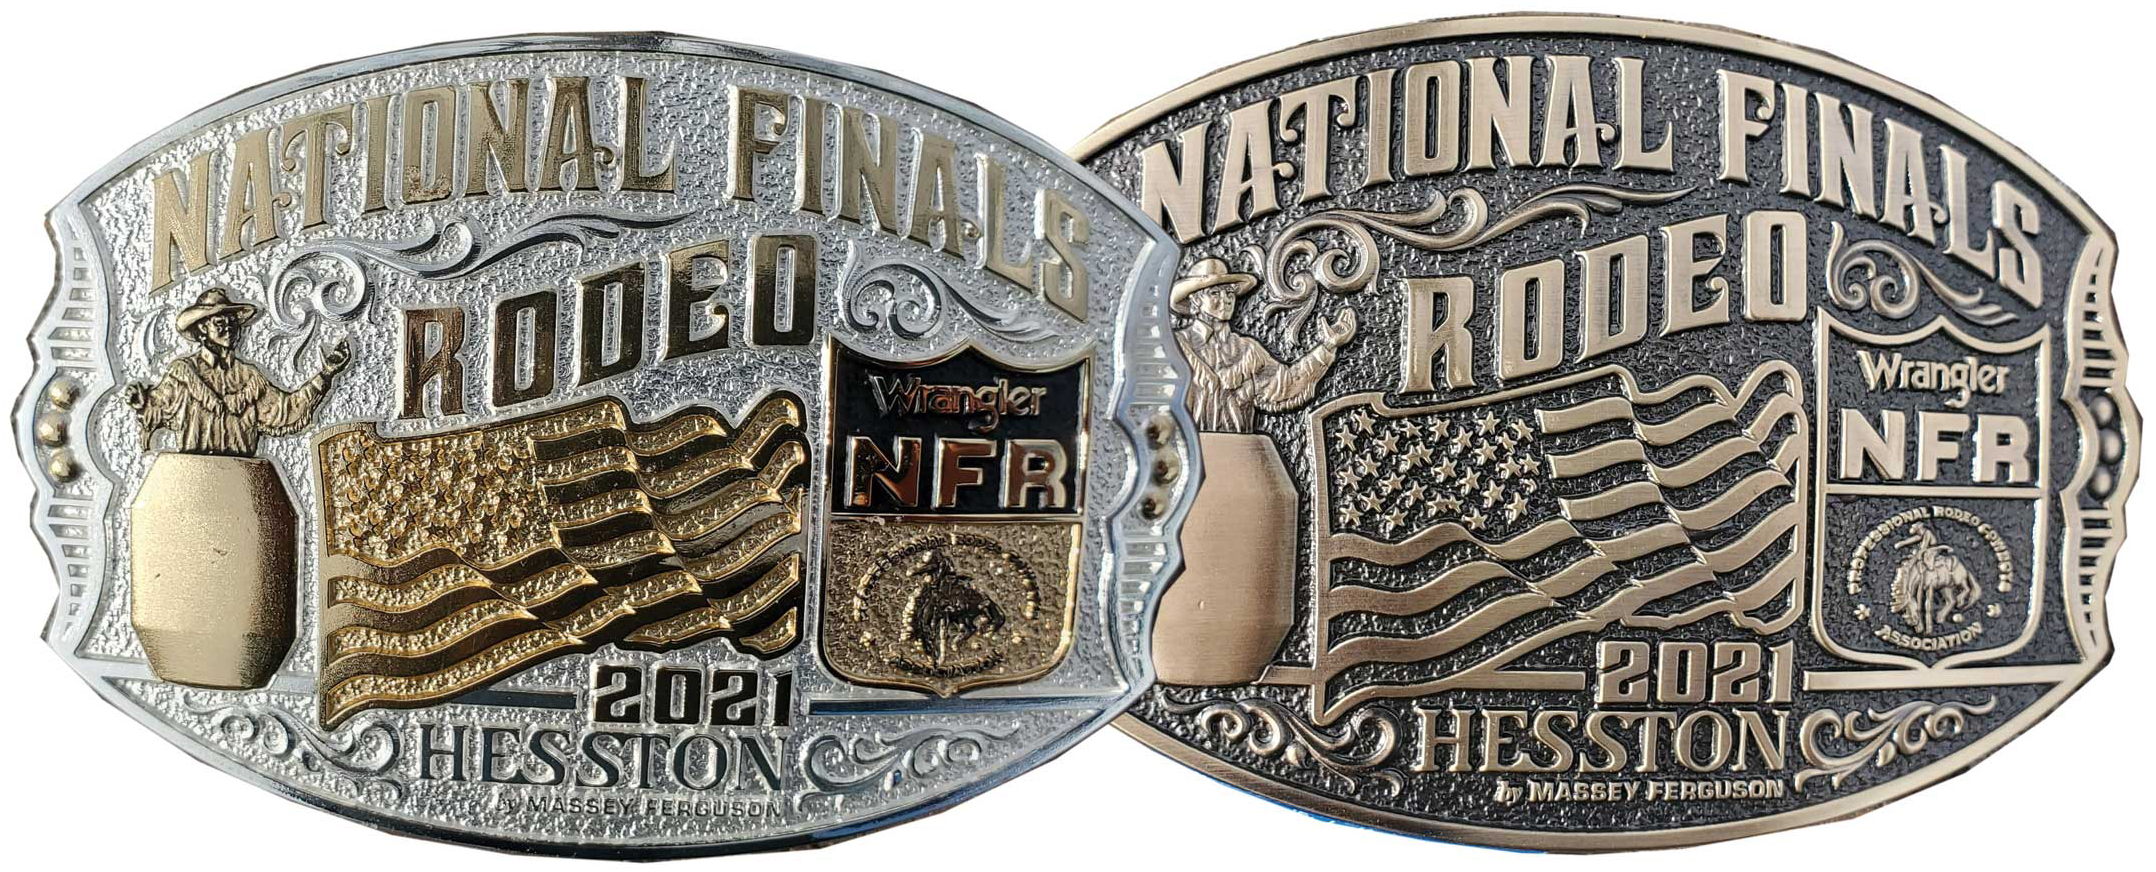 New Wrangler NFR Hesston 2012 National Finals Rodeo Adult Belt Buckle